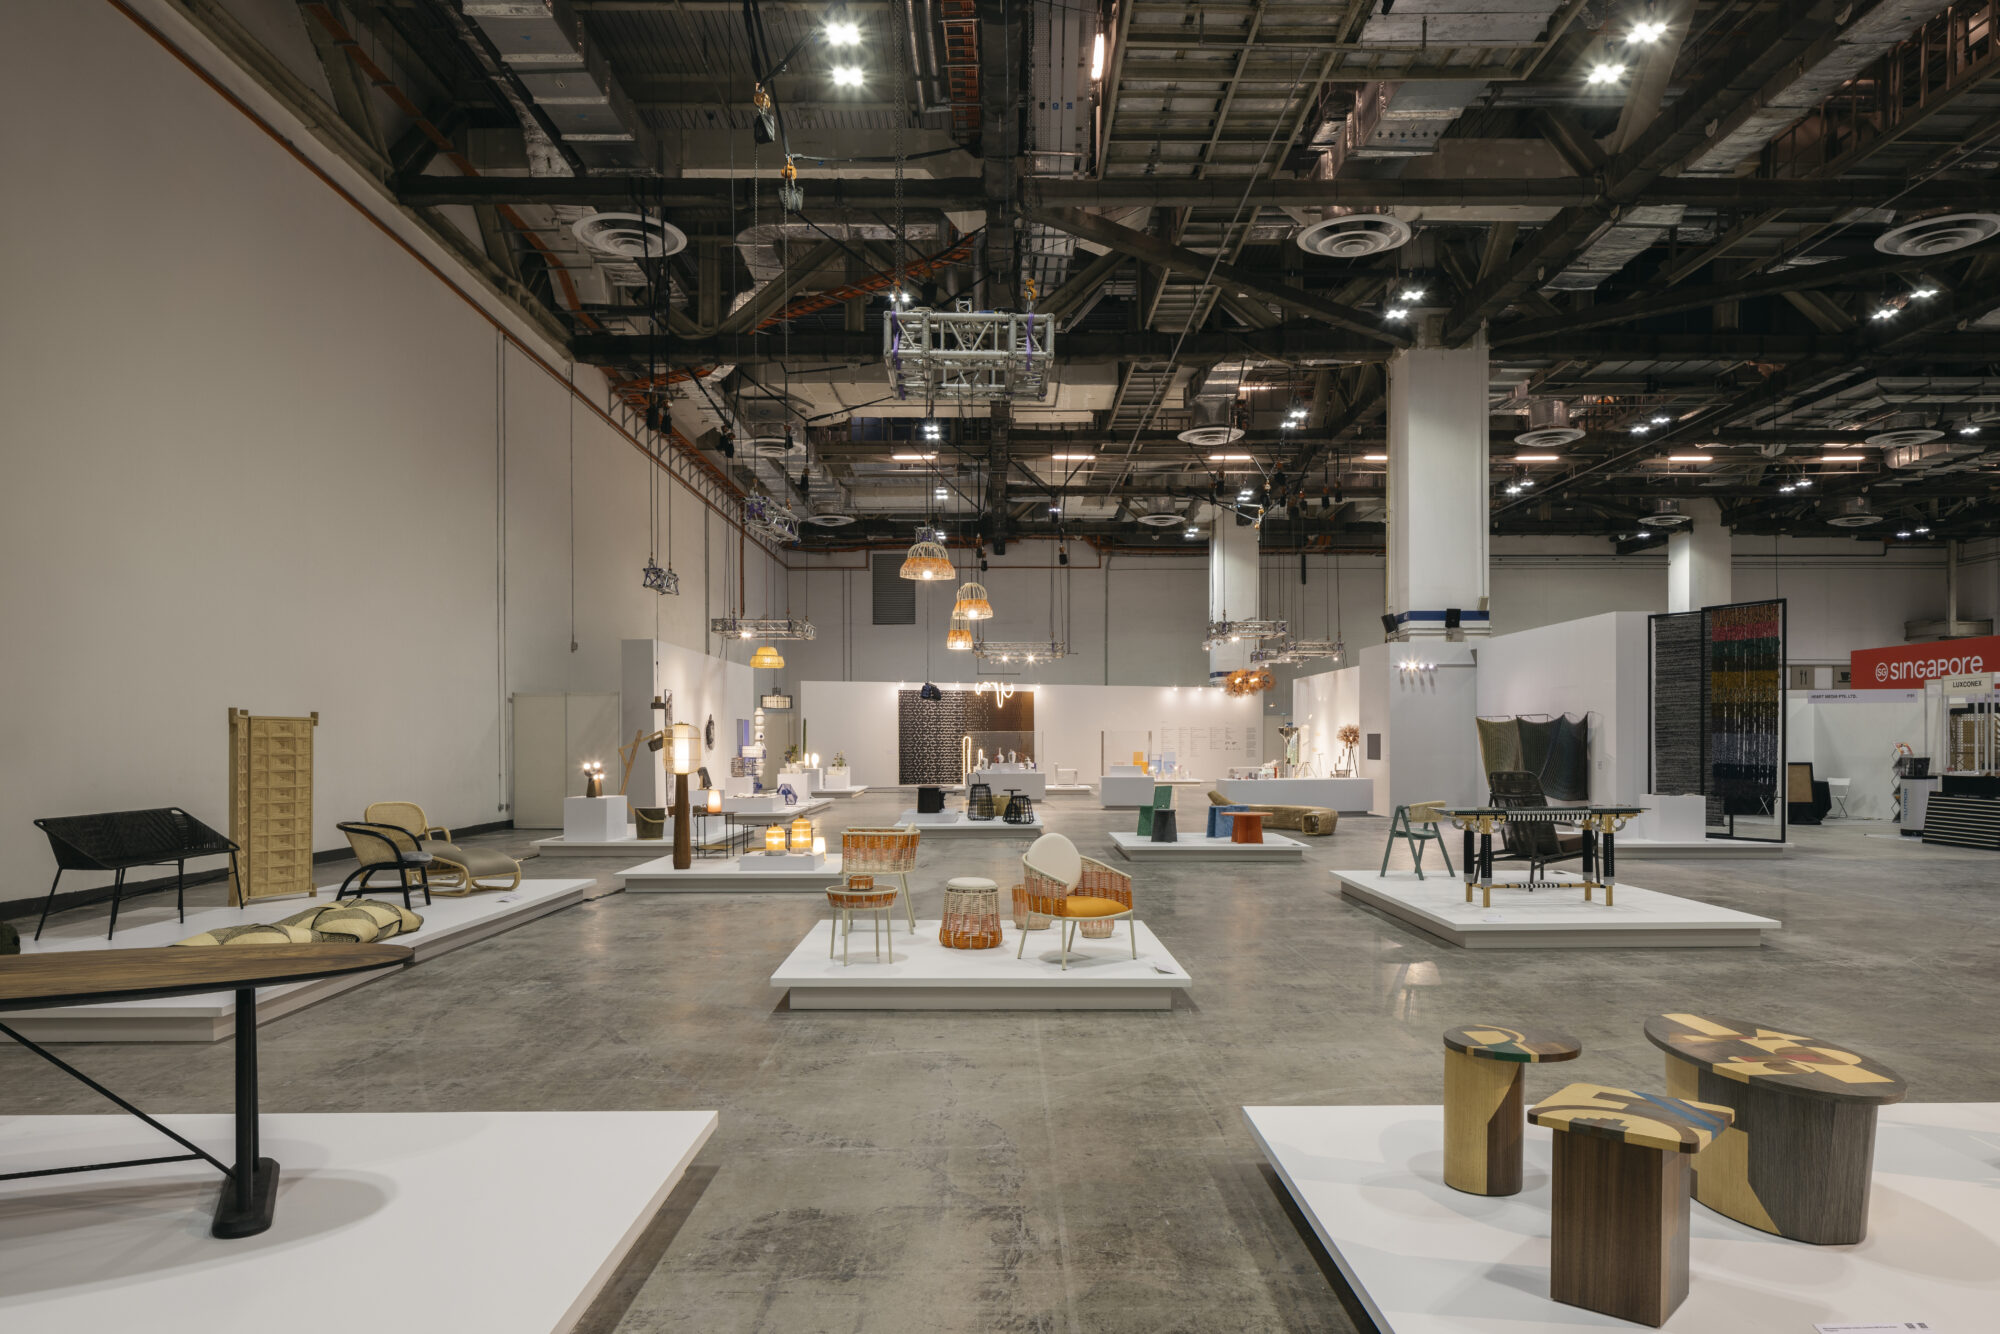 Emerge showcases Southeast Asian design at Singapore Design Week